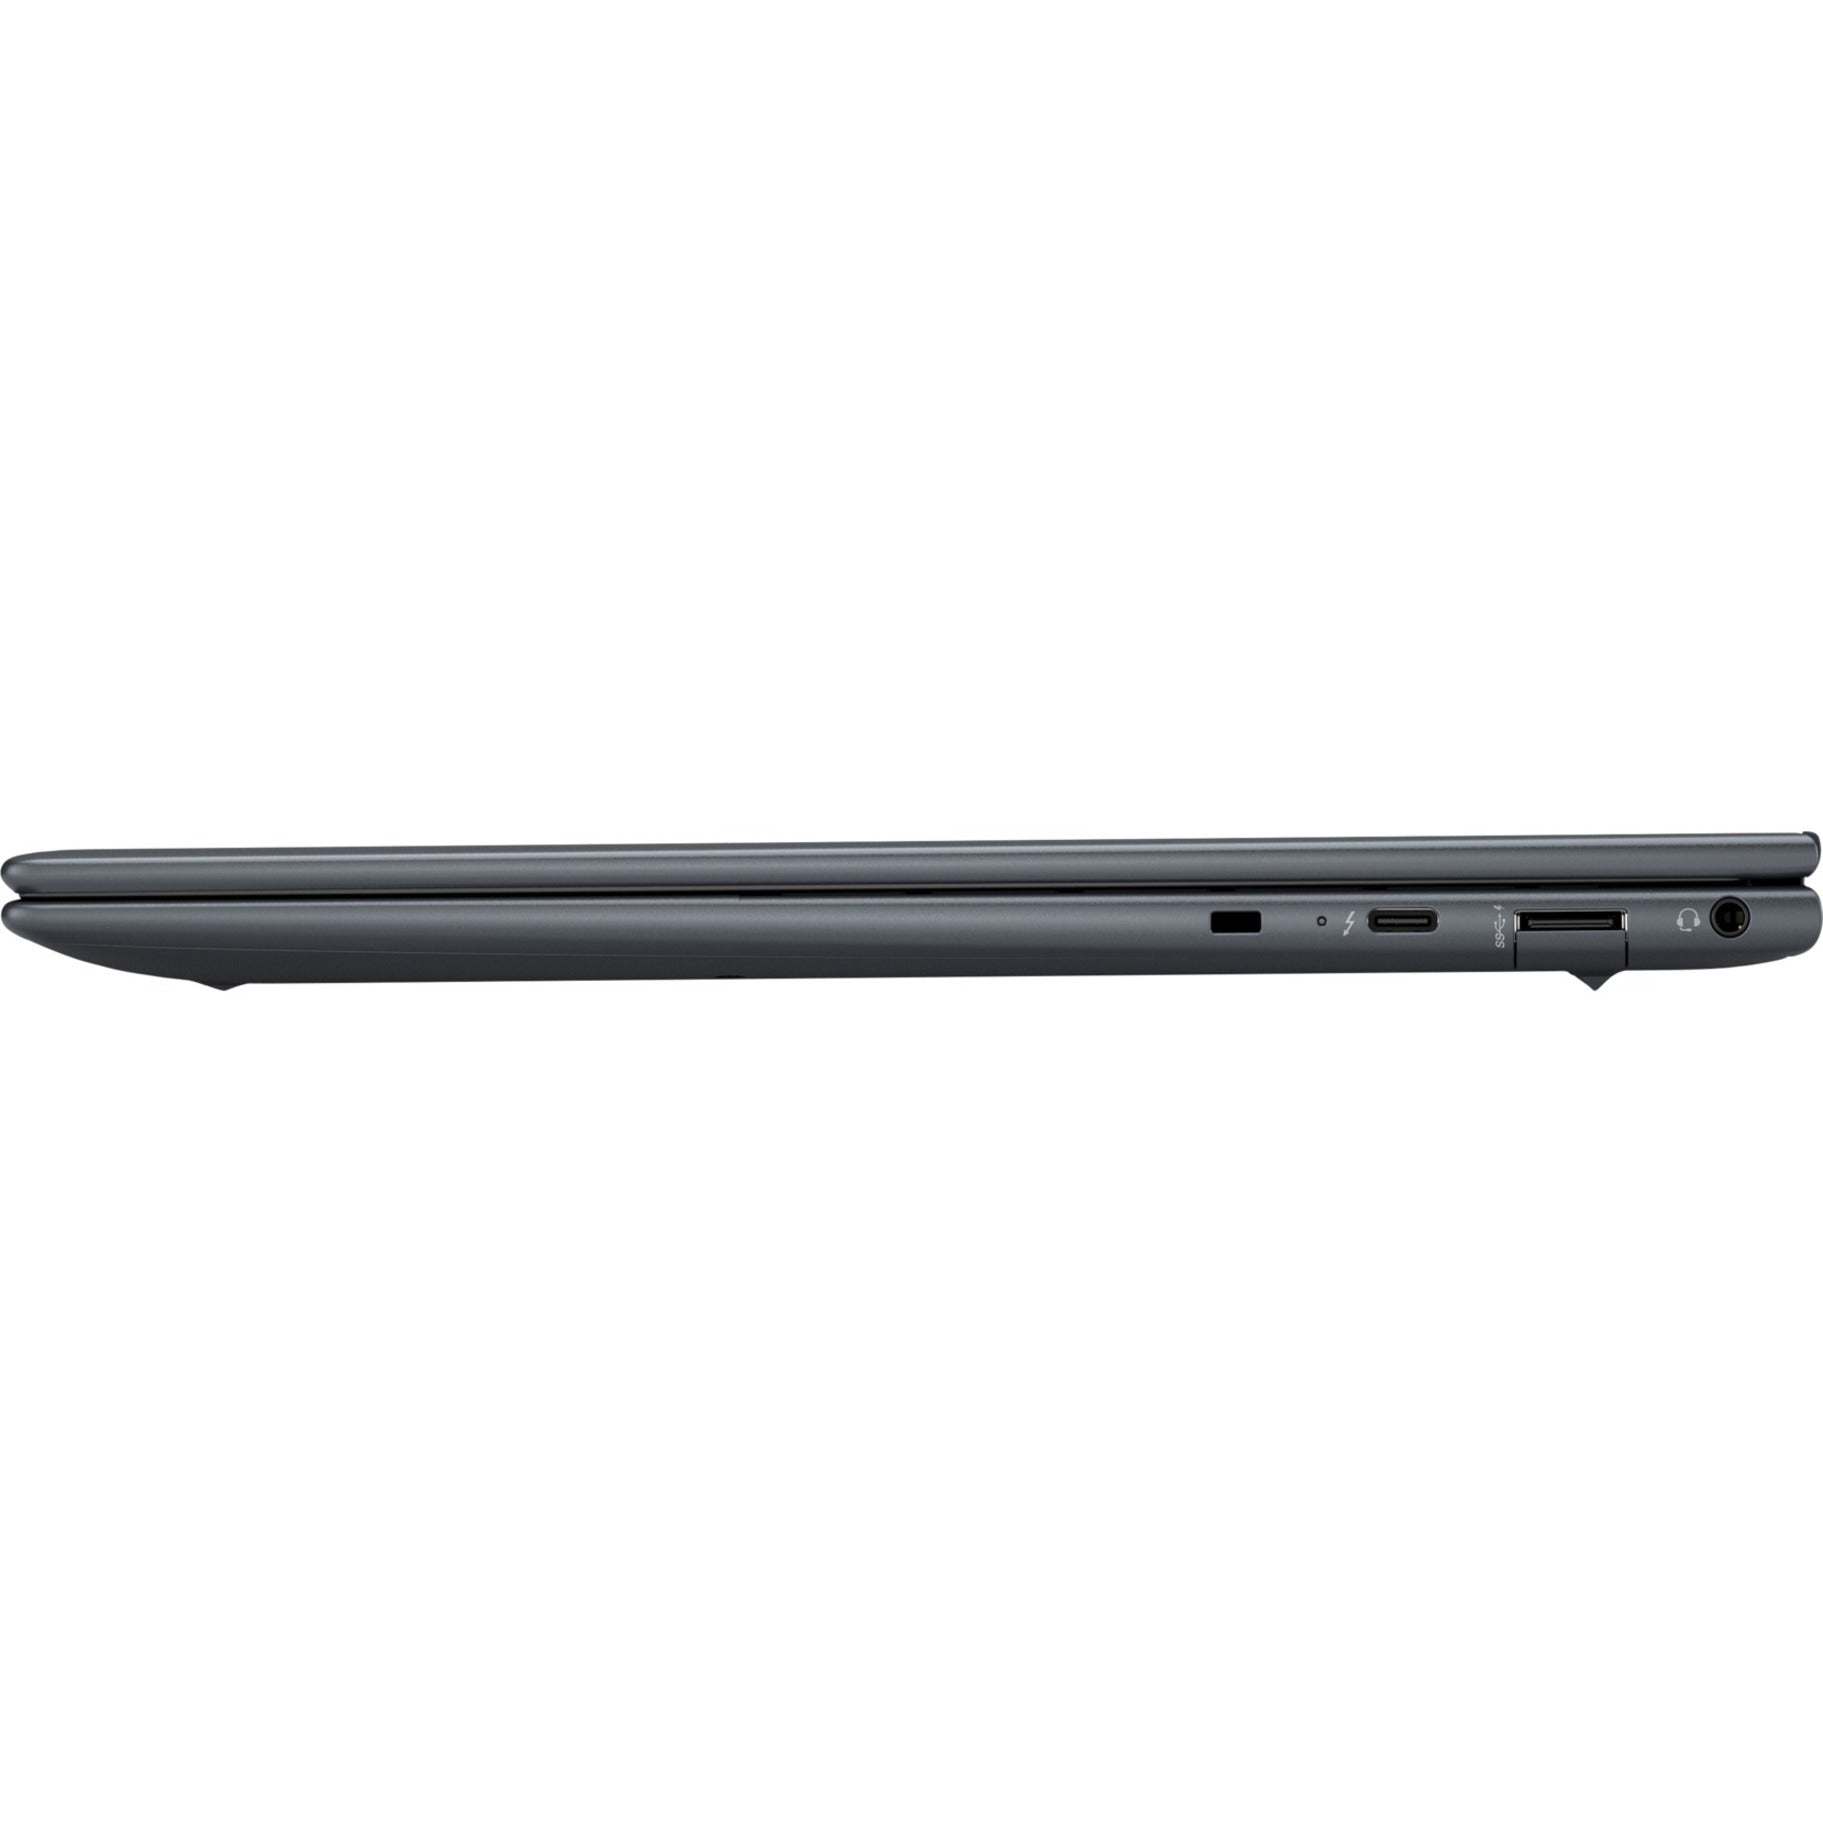 HP Elite Dragonfly G3 13.5" Touchscreen Notebook, Intel Core i5 12th Gen, 16GB RAM, 256GB SSD, Windows 10 Pro